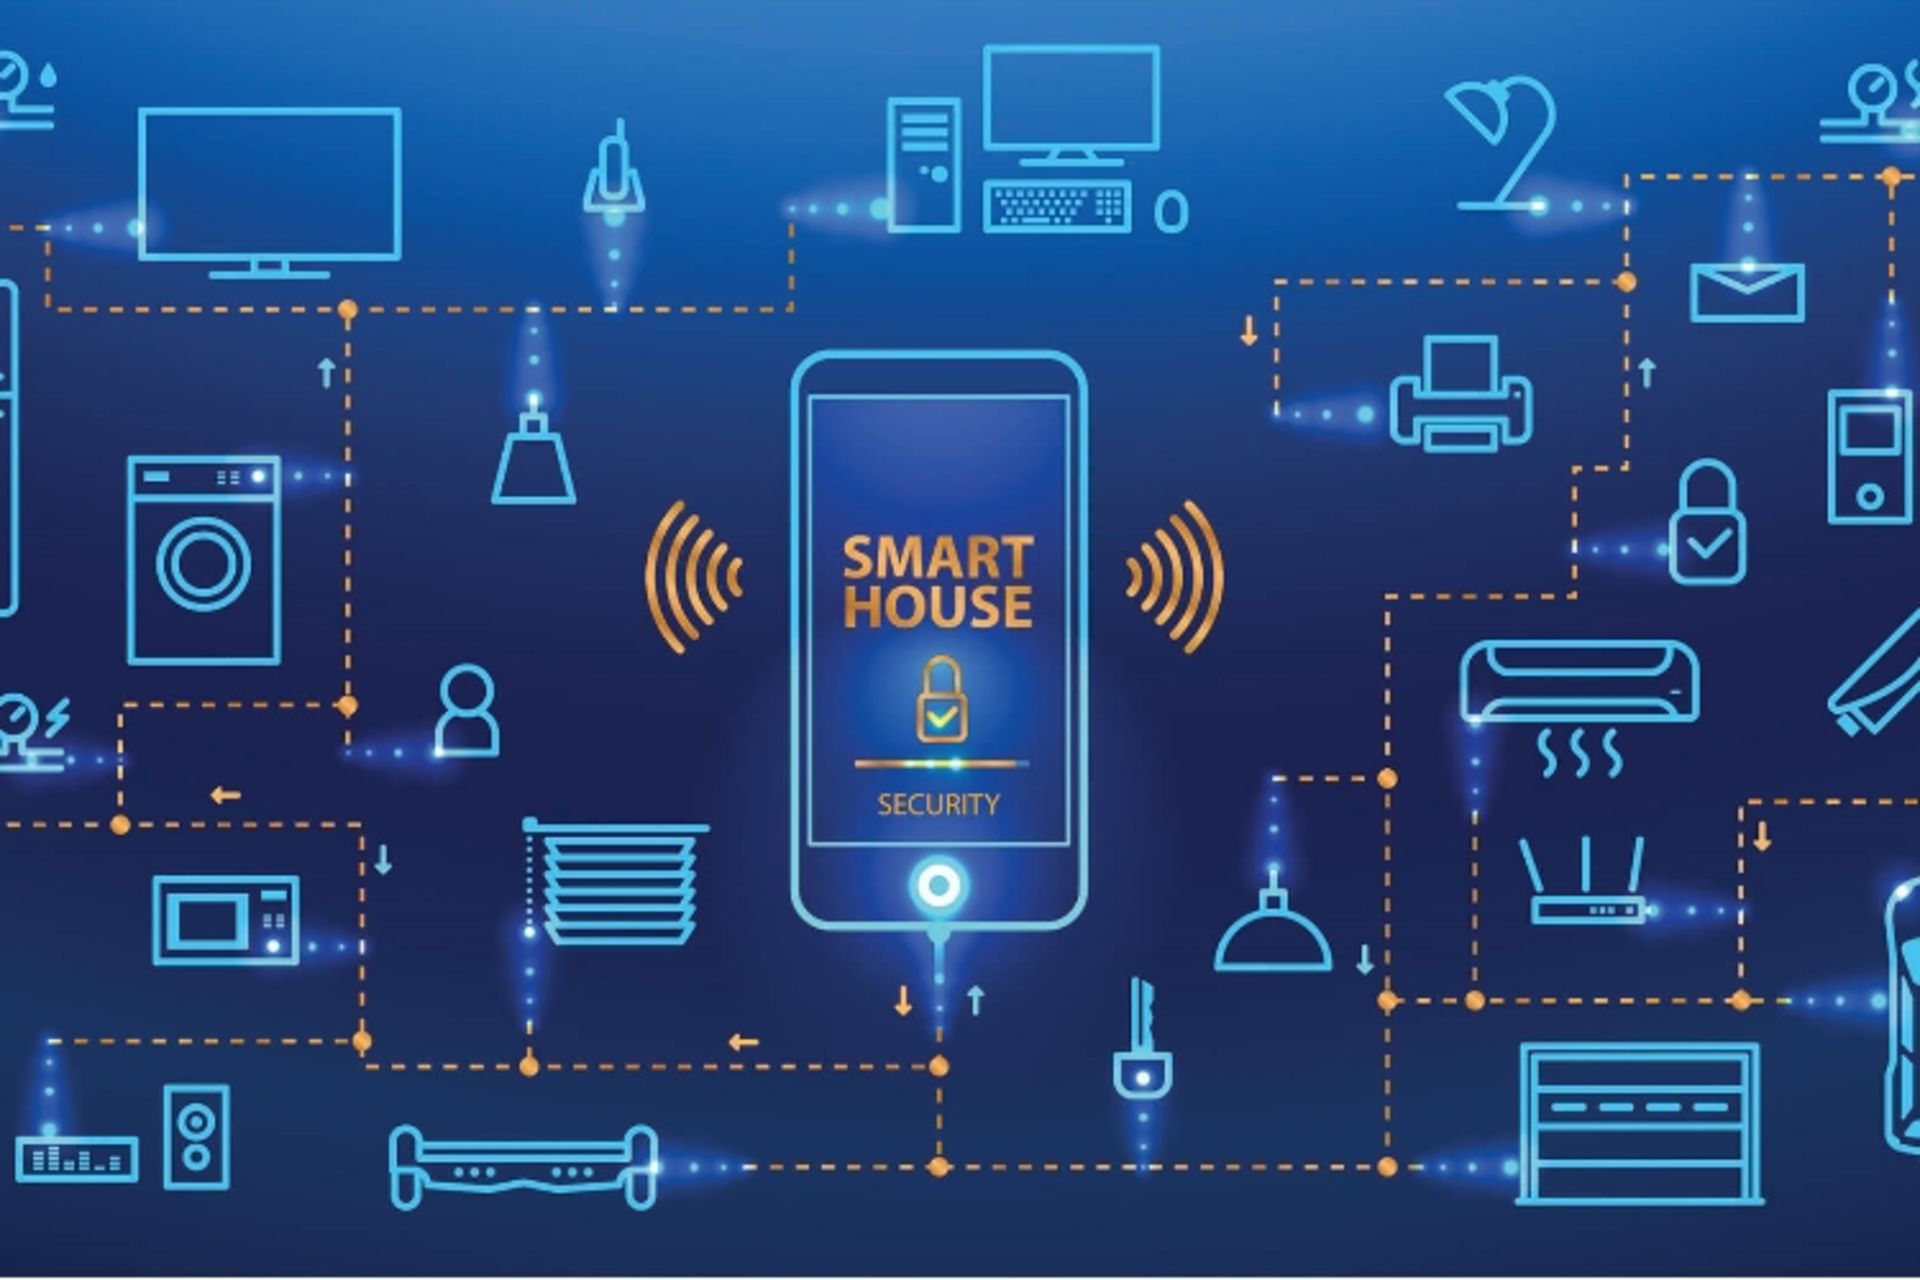 خانه هوشمند / Smart Home